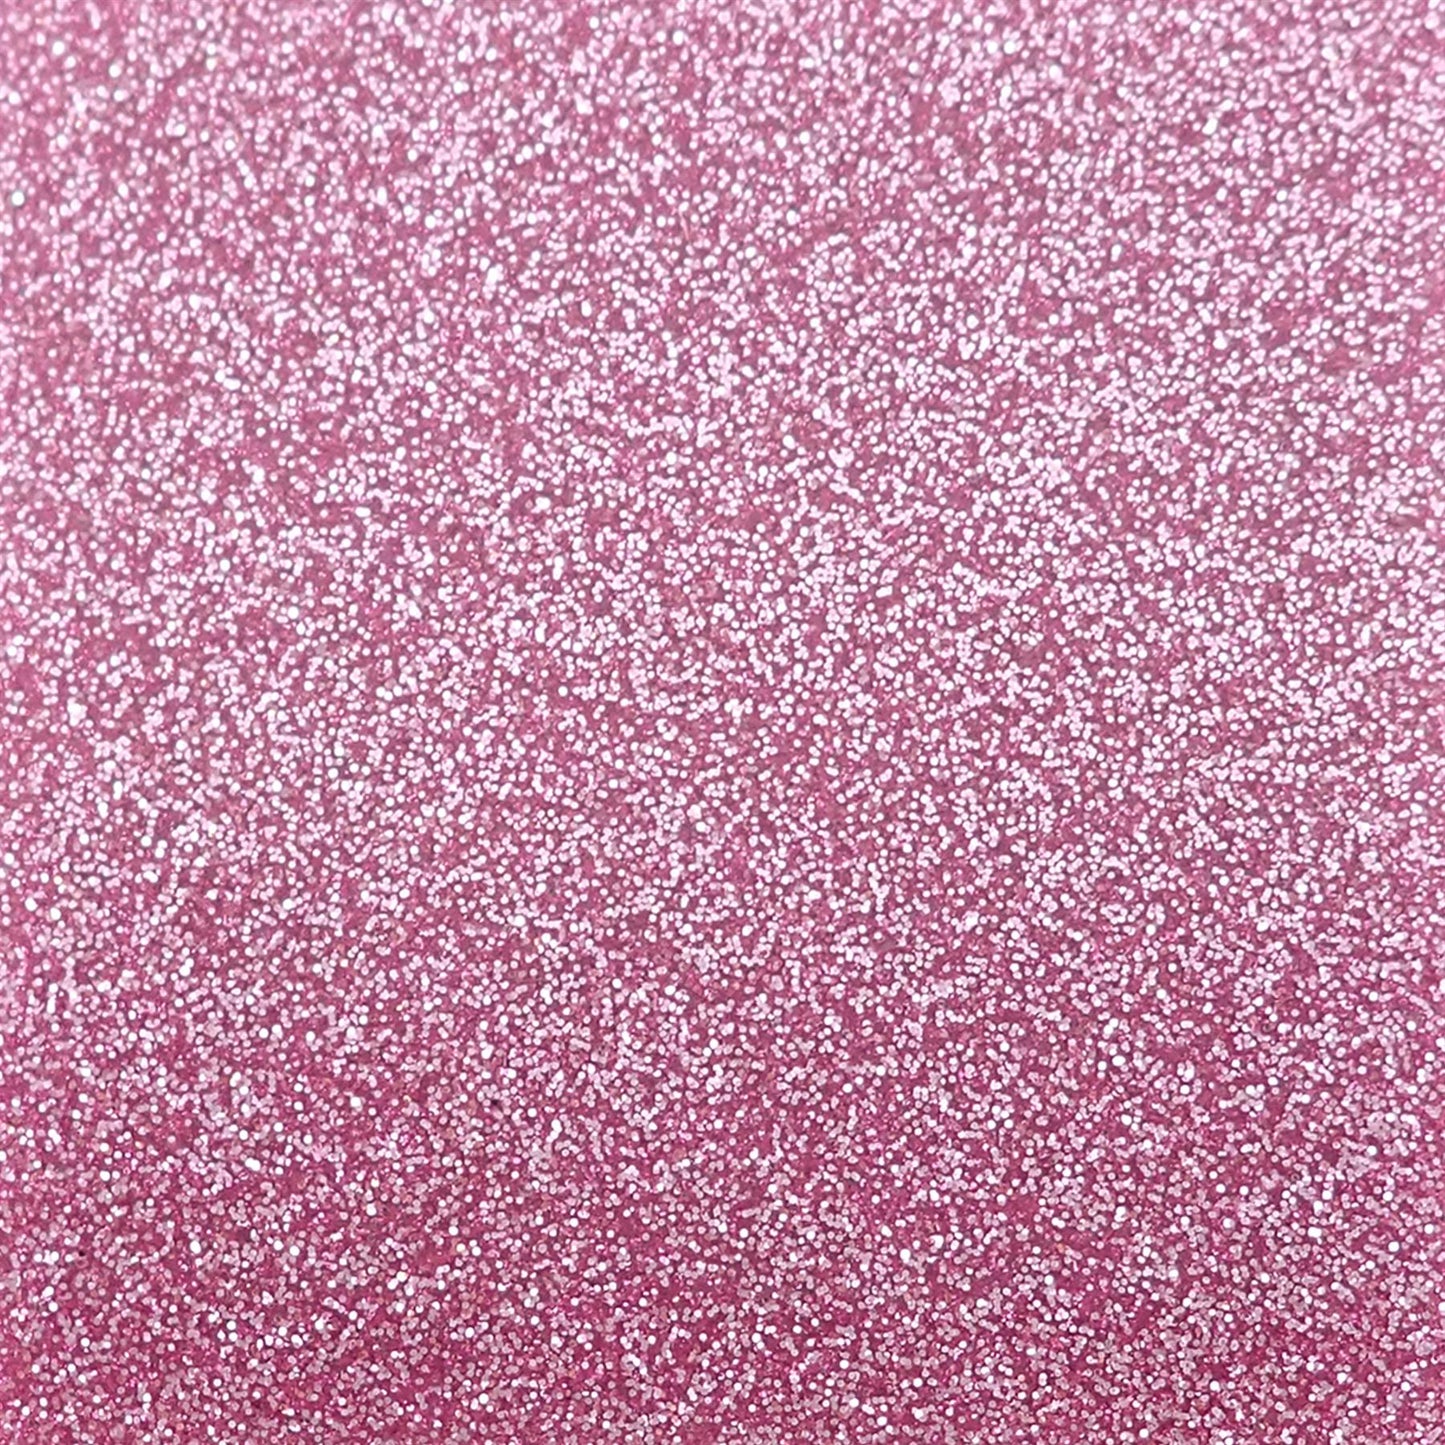 Incudo Pink Glitter Acrylic Sheet - 500x300x3mm